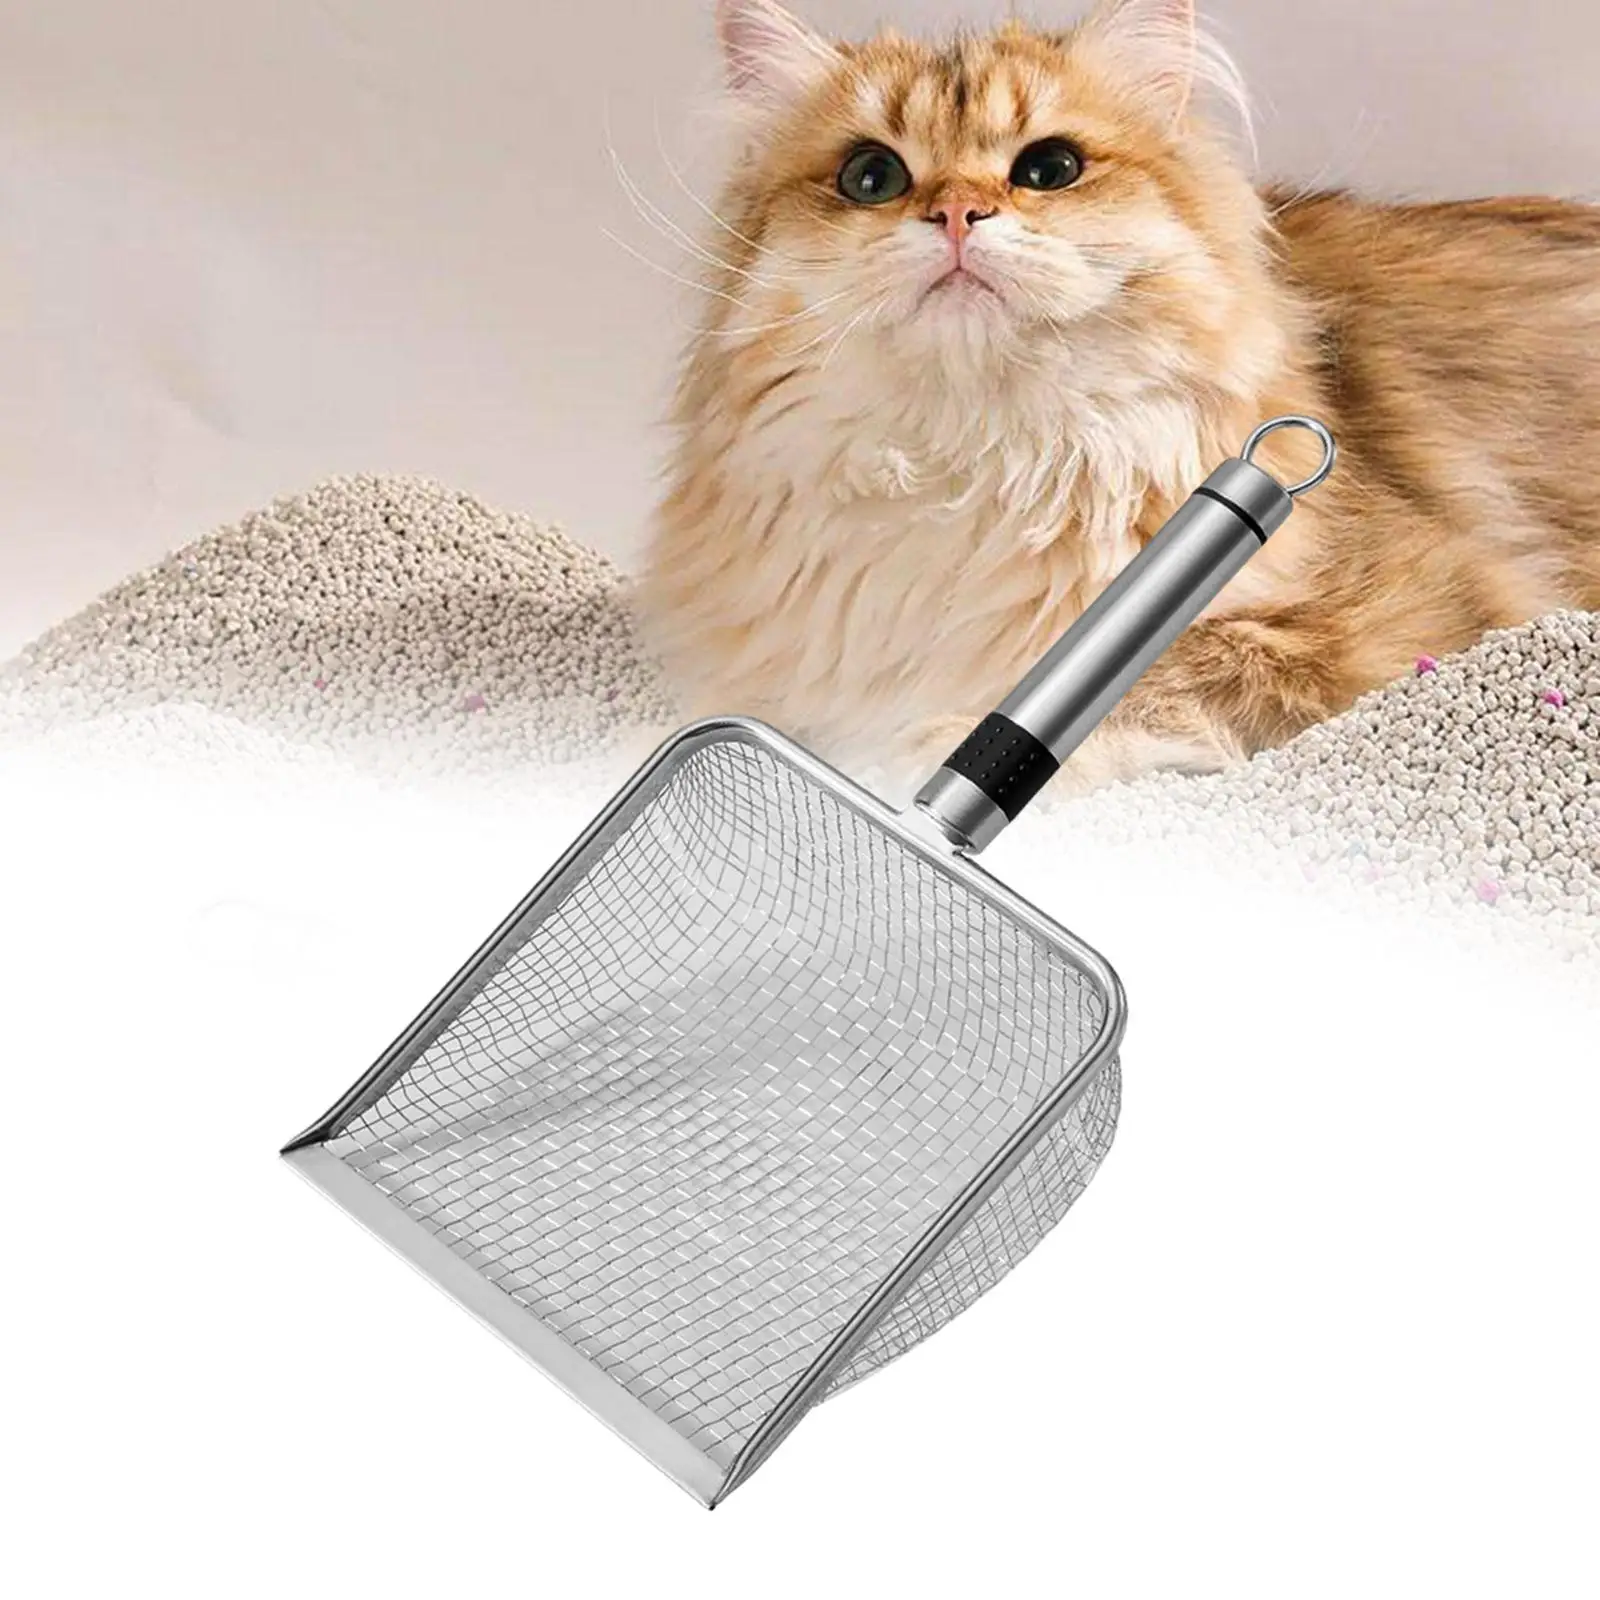 Pets Sifter Shovel Kitten Substrate Cleaner 4 Mesh Cats Litter Scooper